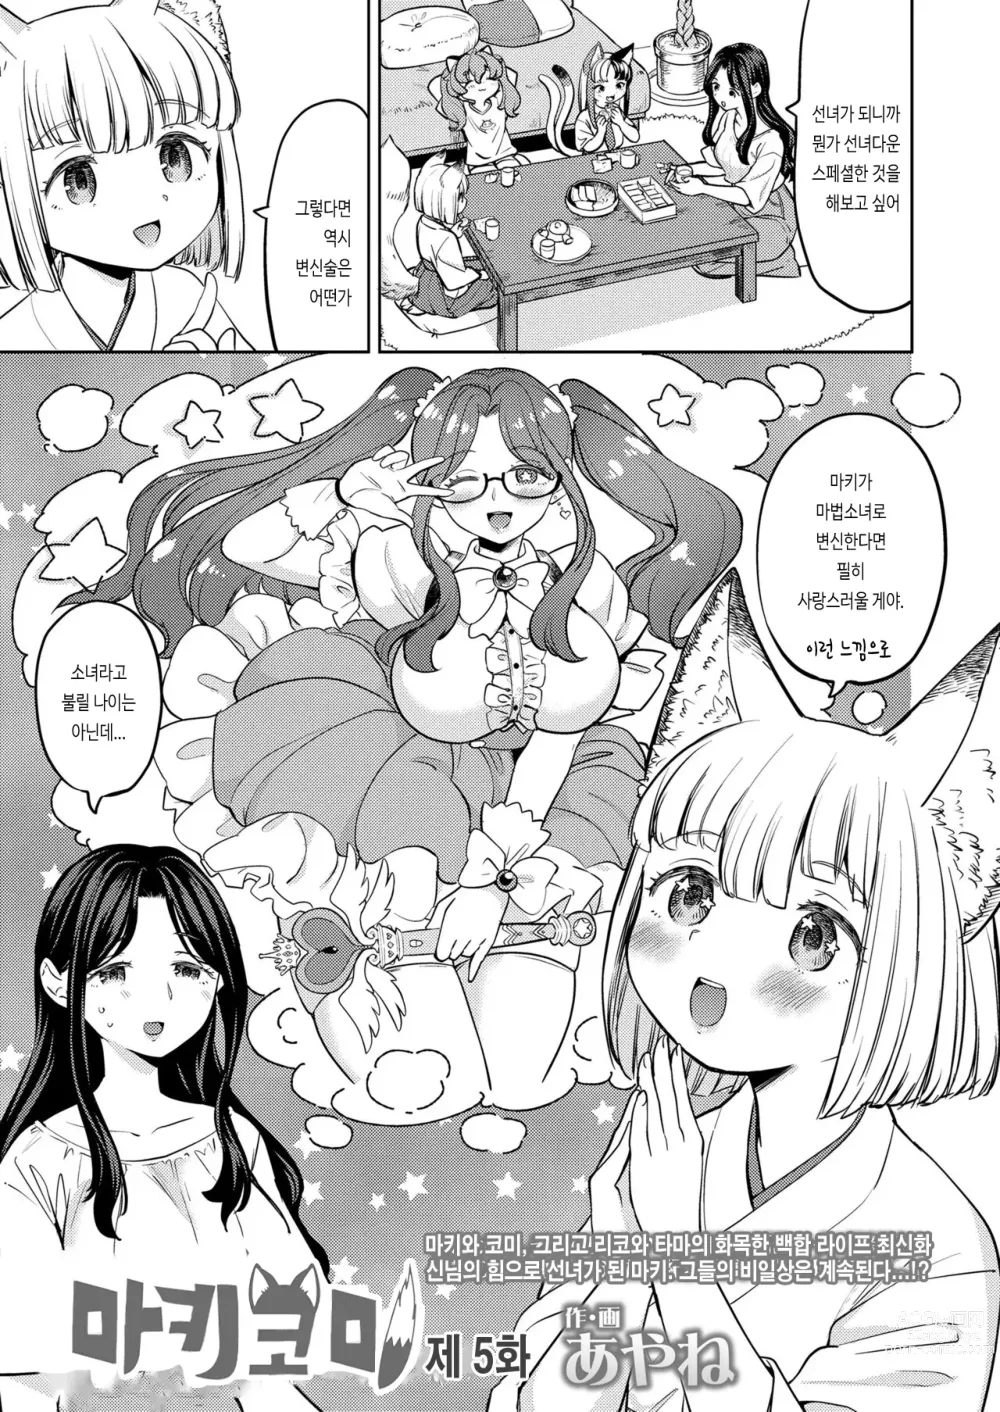 Page 1 of manga  마키코미 제5화